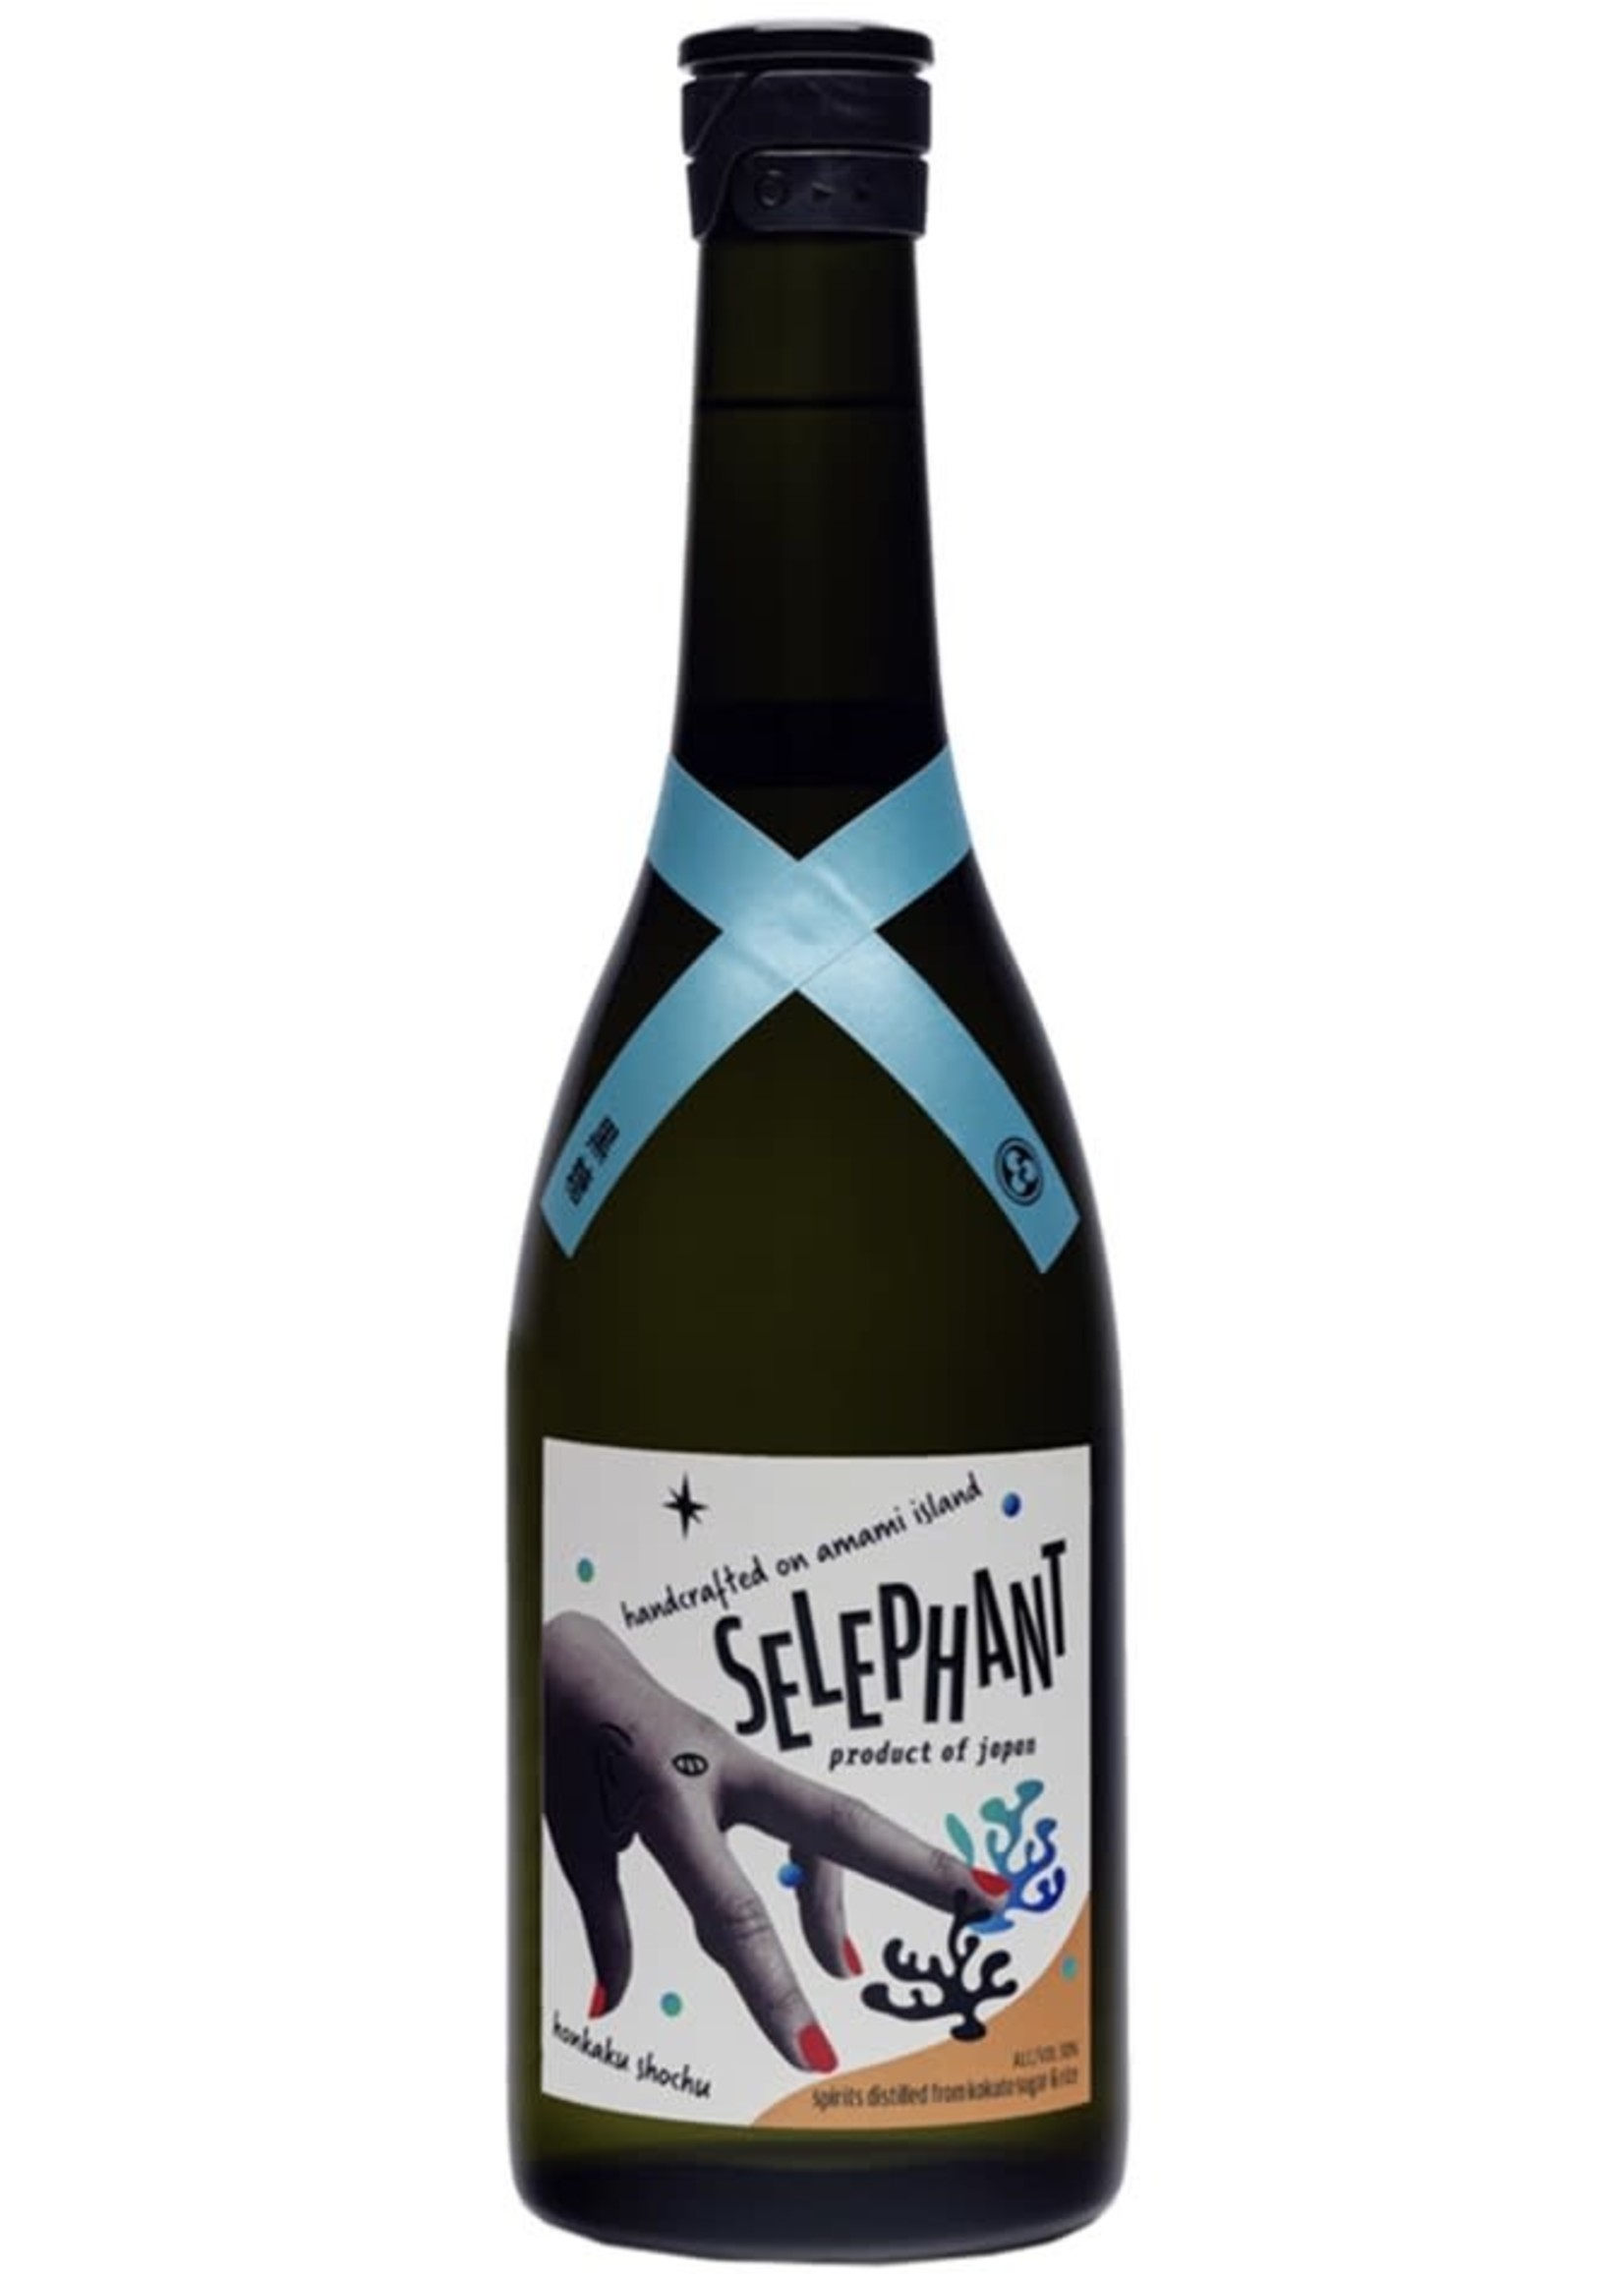 Selephant Selephant / Honkaku Shochu Distilled from Sugar & Rice 30% abv / 750mL